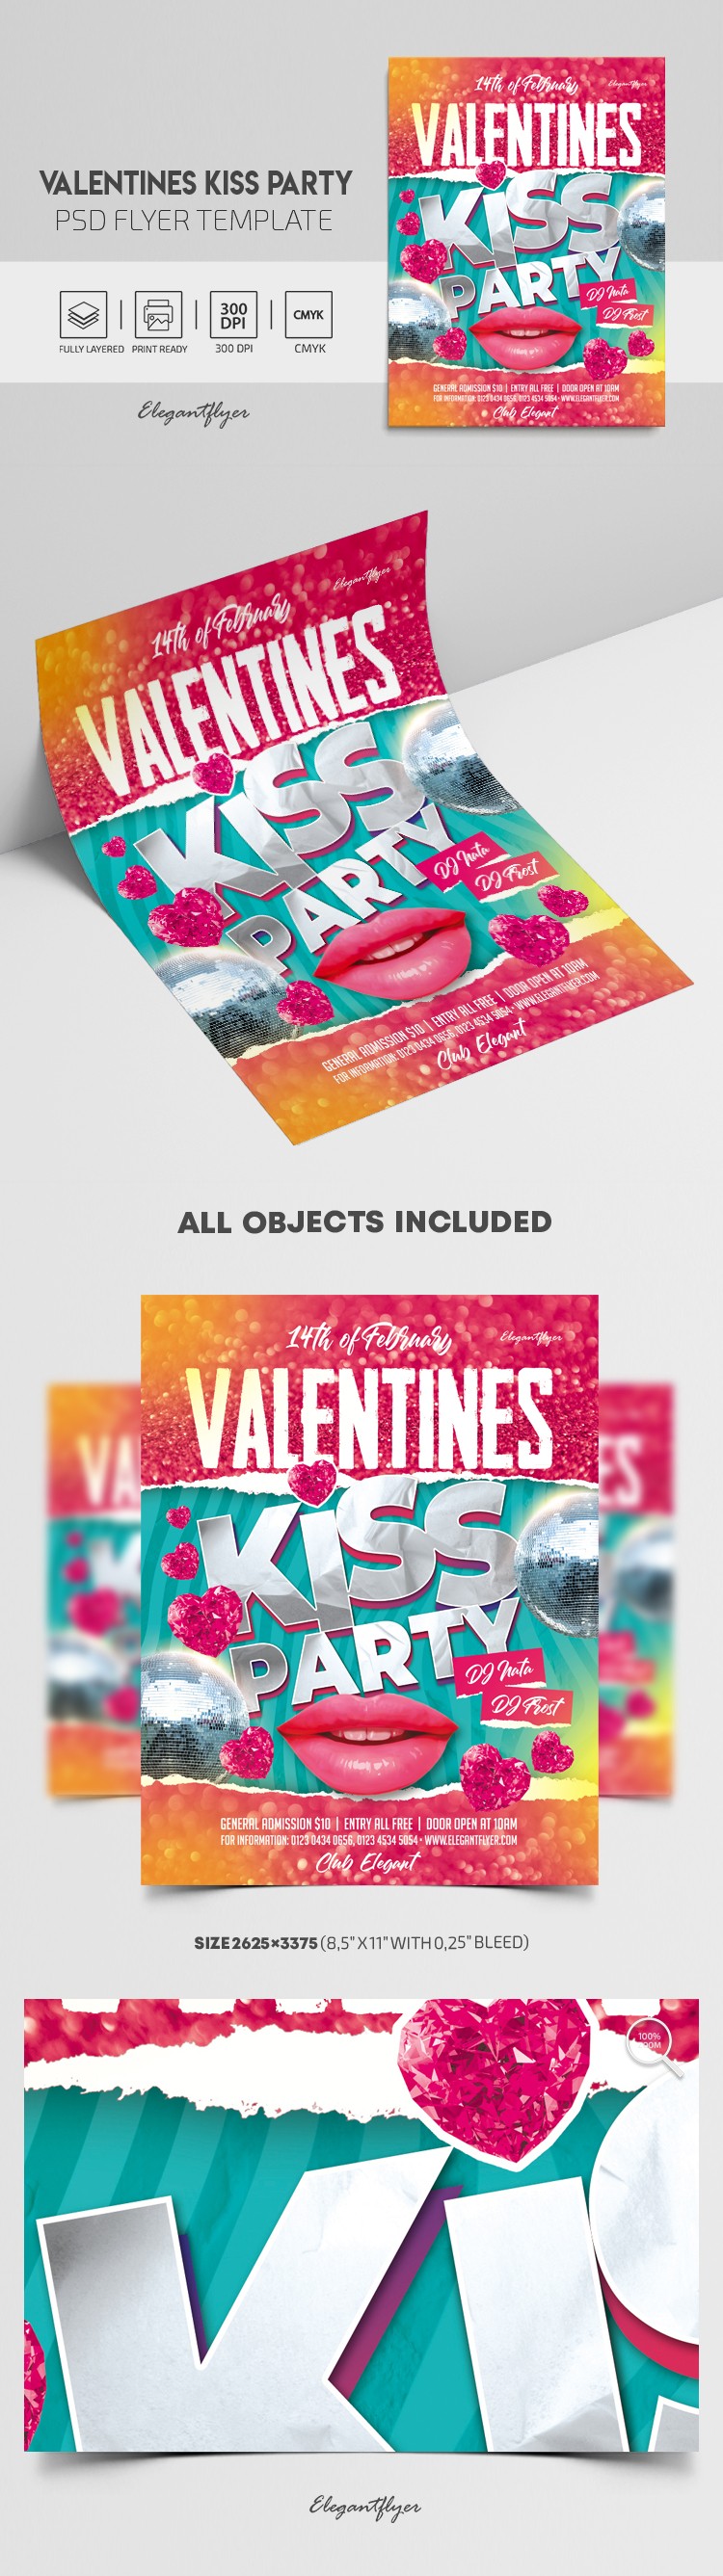 Valentinstag Kuss Party Flyer by ElegantFlyer